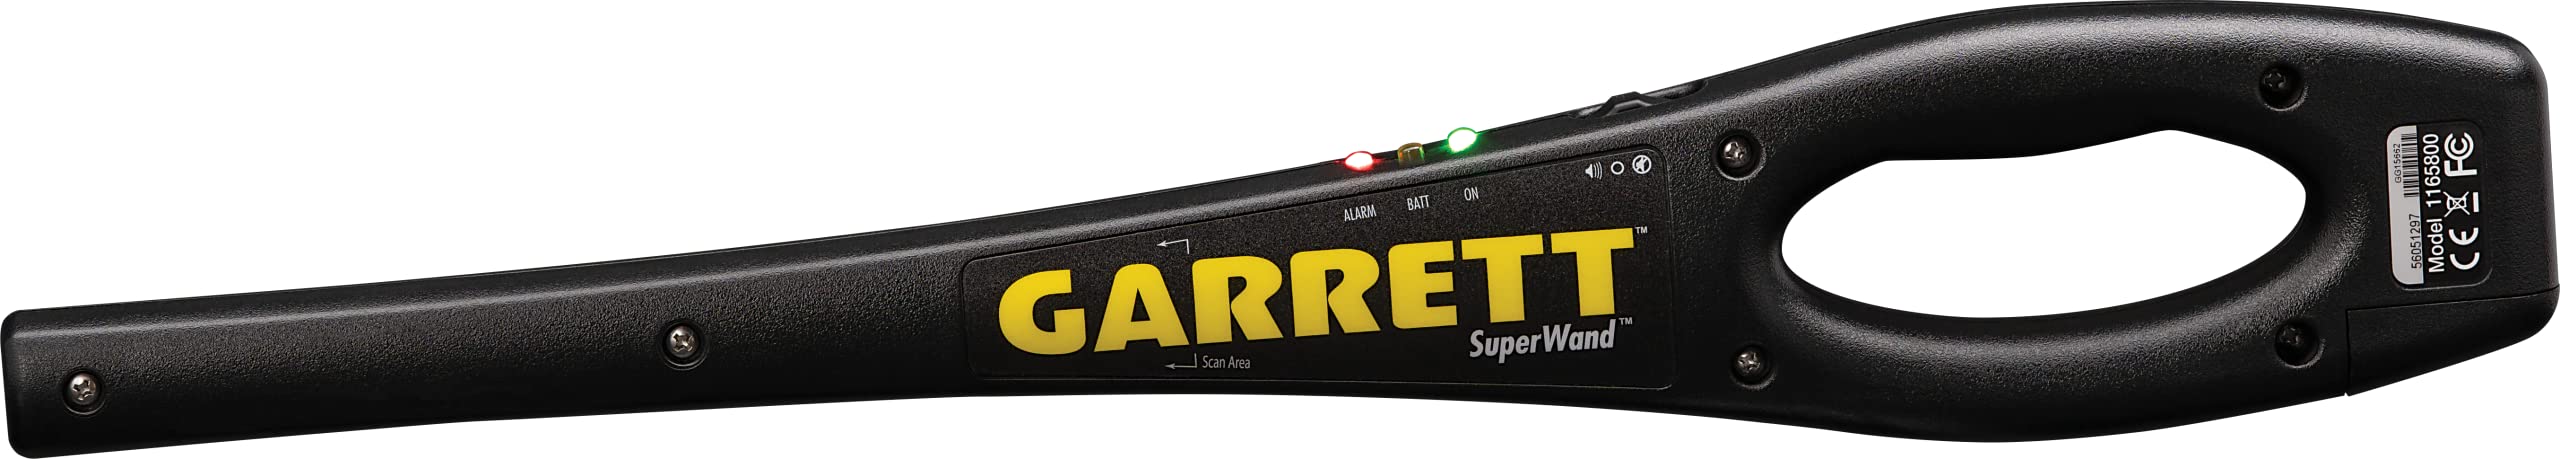 Garrett スーパーワンド金属探知機